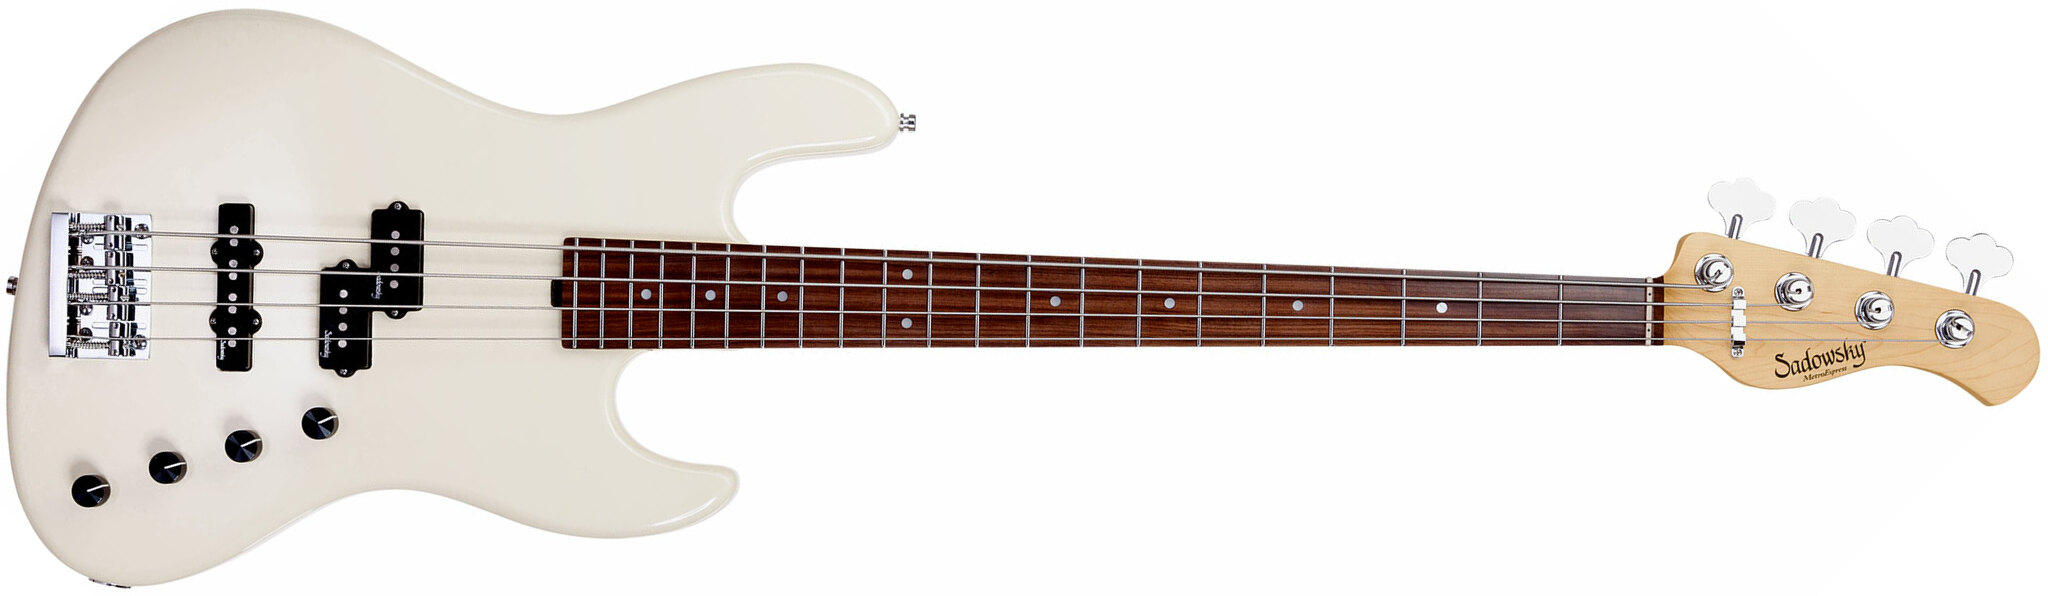 Sadowsky Verdine White 21 Fret 4c Metroexpress Signature Rw - Olympic White - Solid body electric bass - Main picture